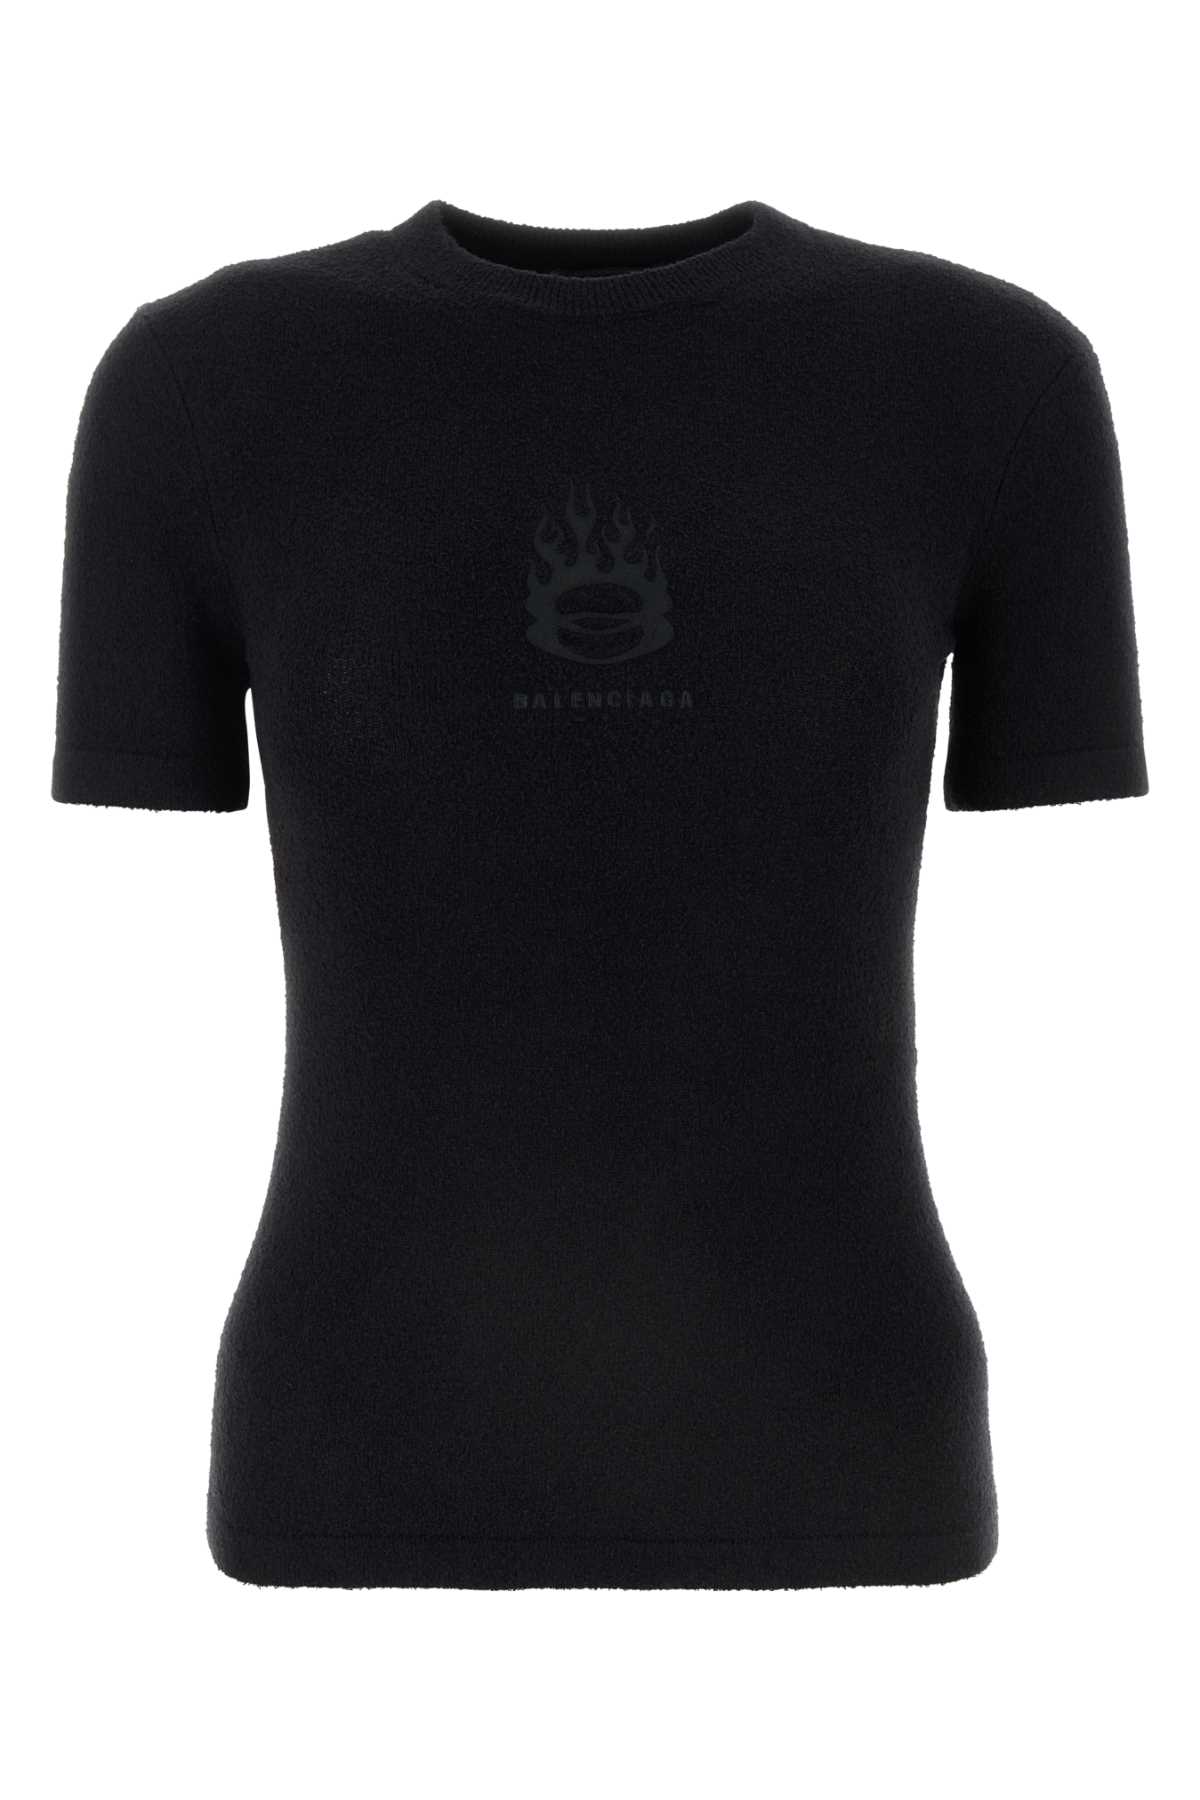 Shop Balenciaga Black Terry Fabric T-shirt